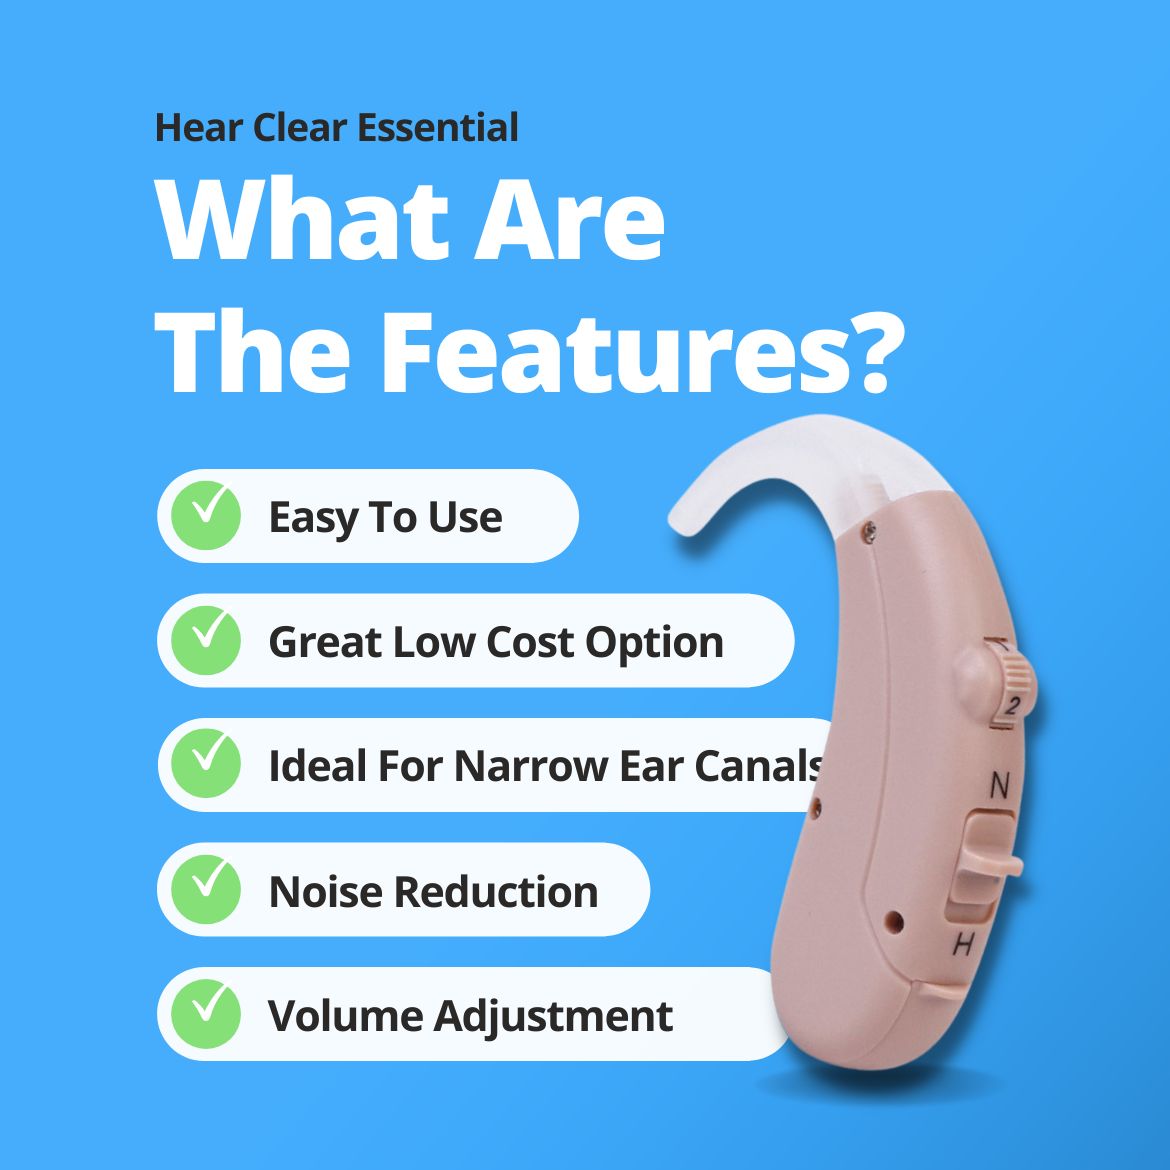 Hear Clear Essential